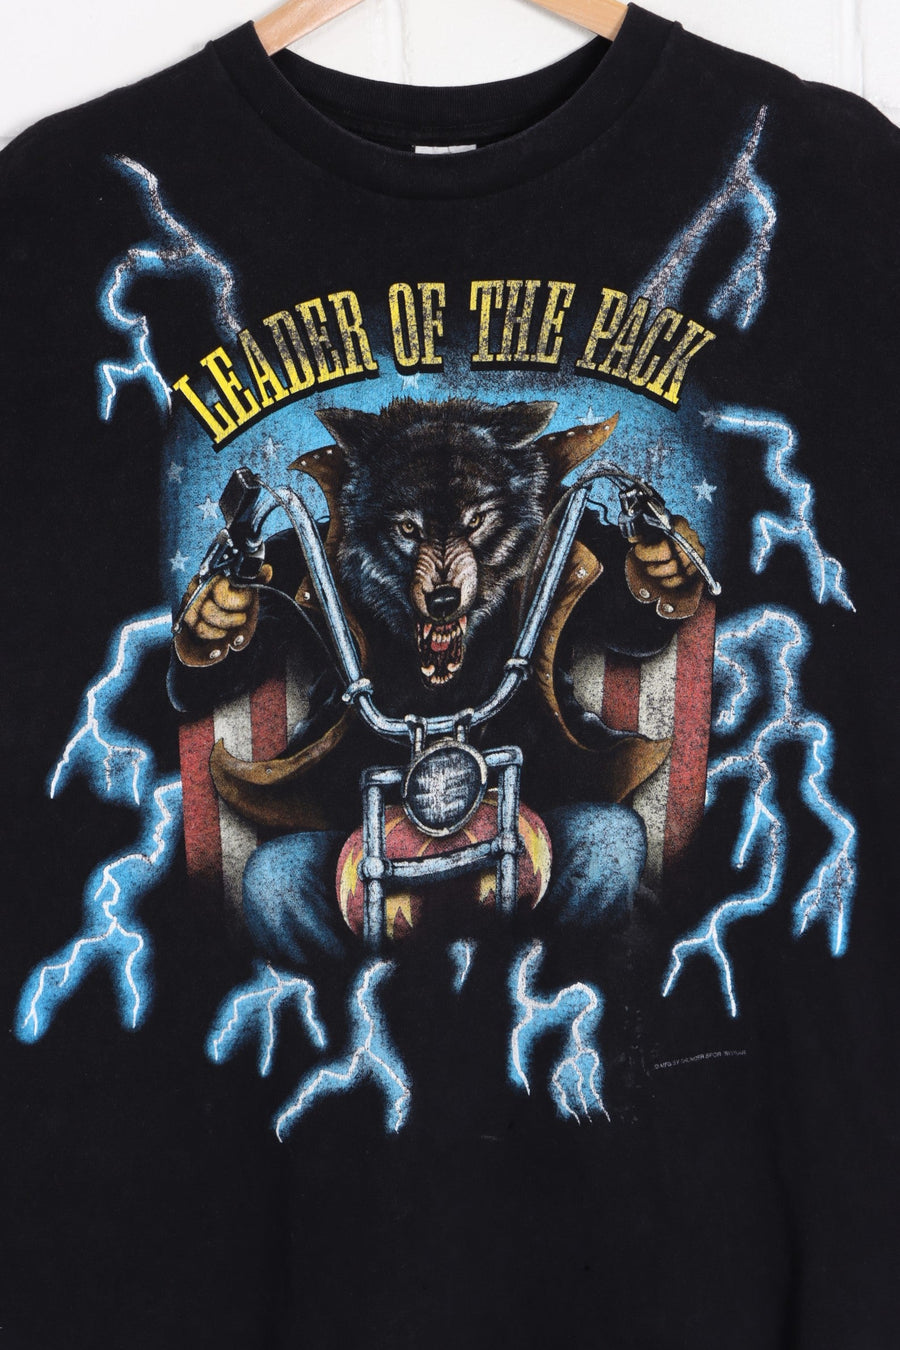 USA THUNDER "Leader of The Pack" Biker Wolf T-Shirt (L-XL)